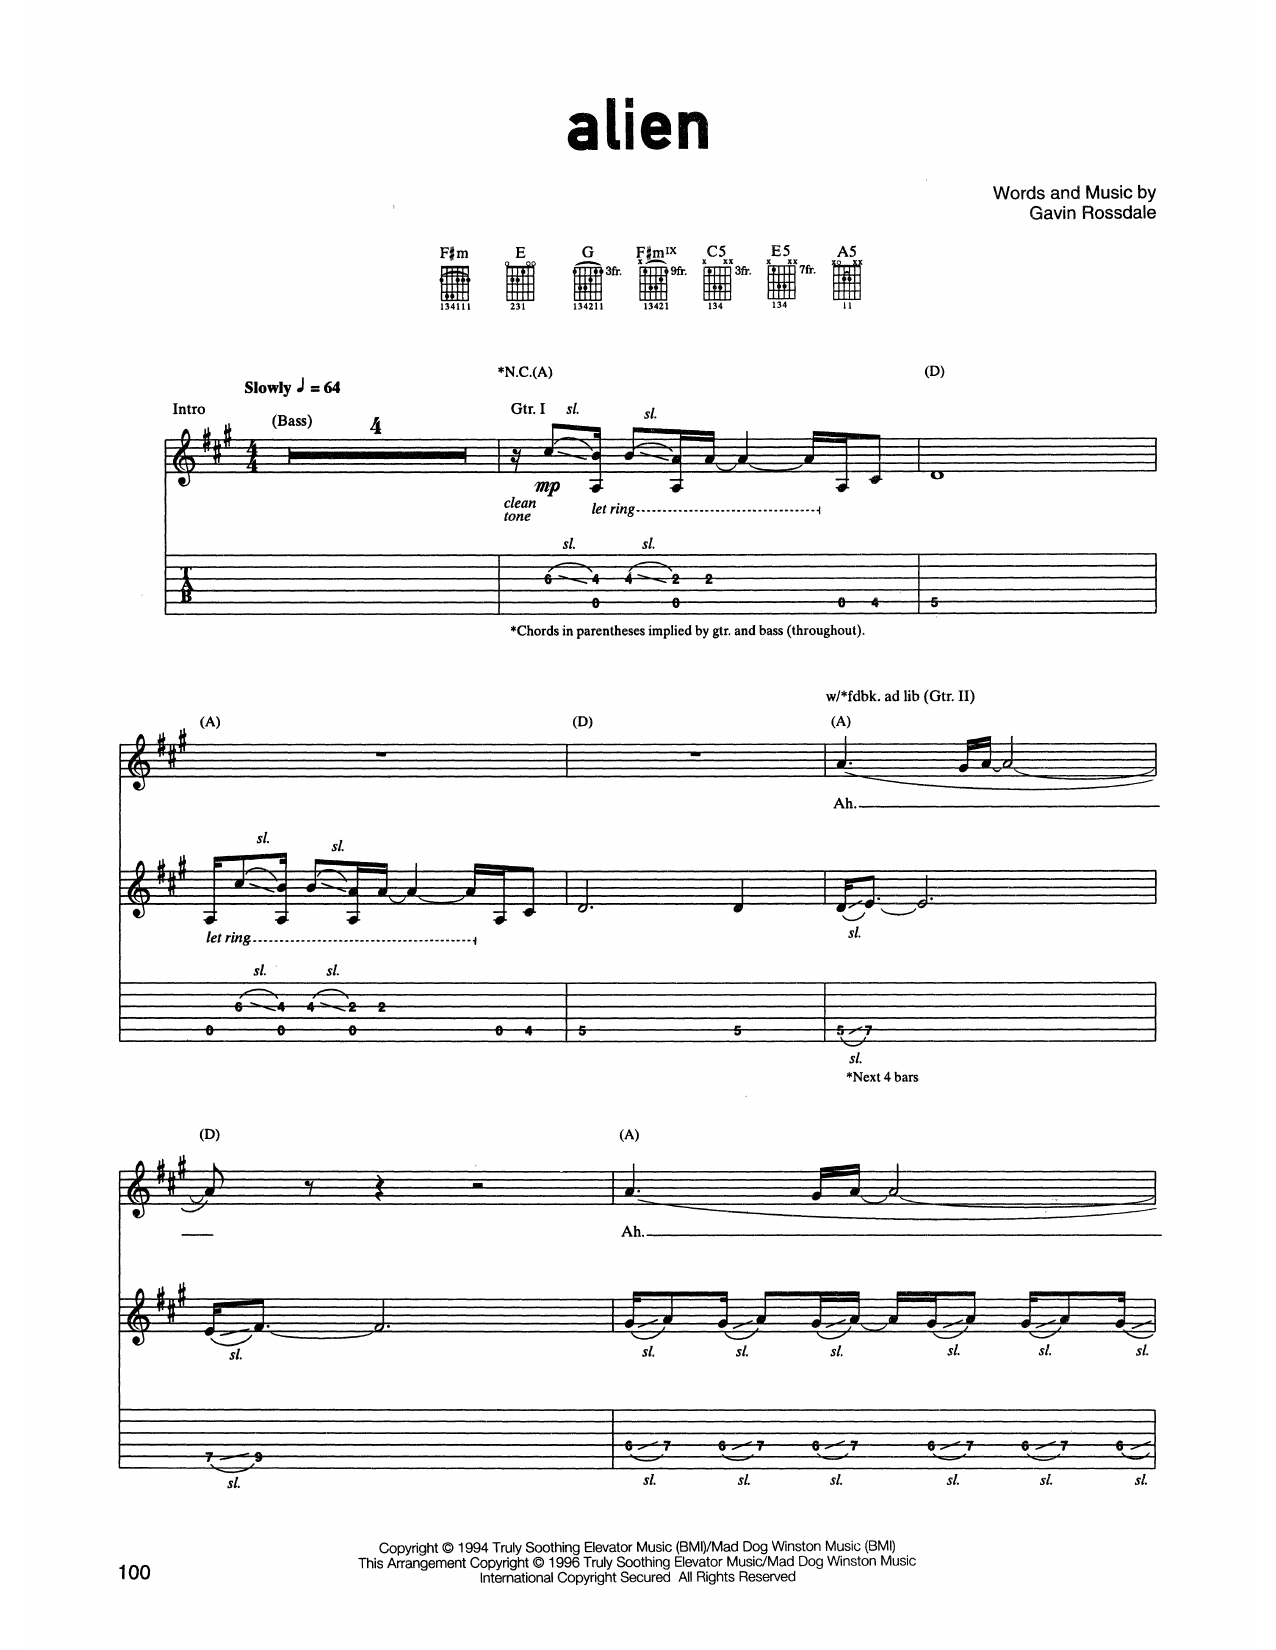 Bush Alien Sheet Music Notes & Chords for Guitar Tab - Download or Print PDF